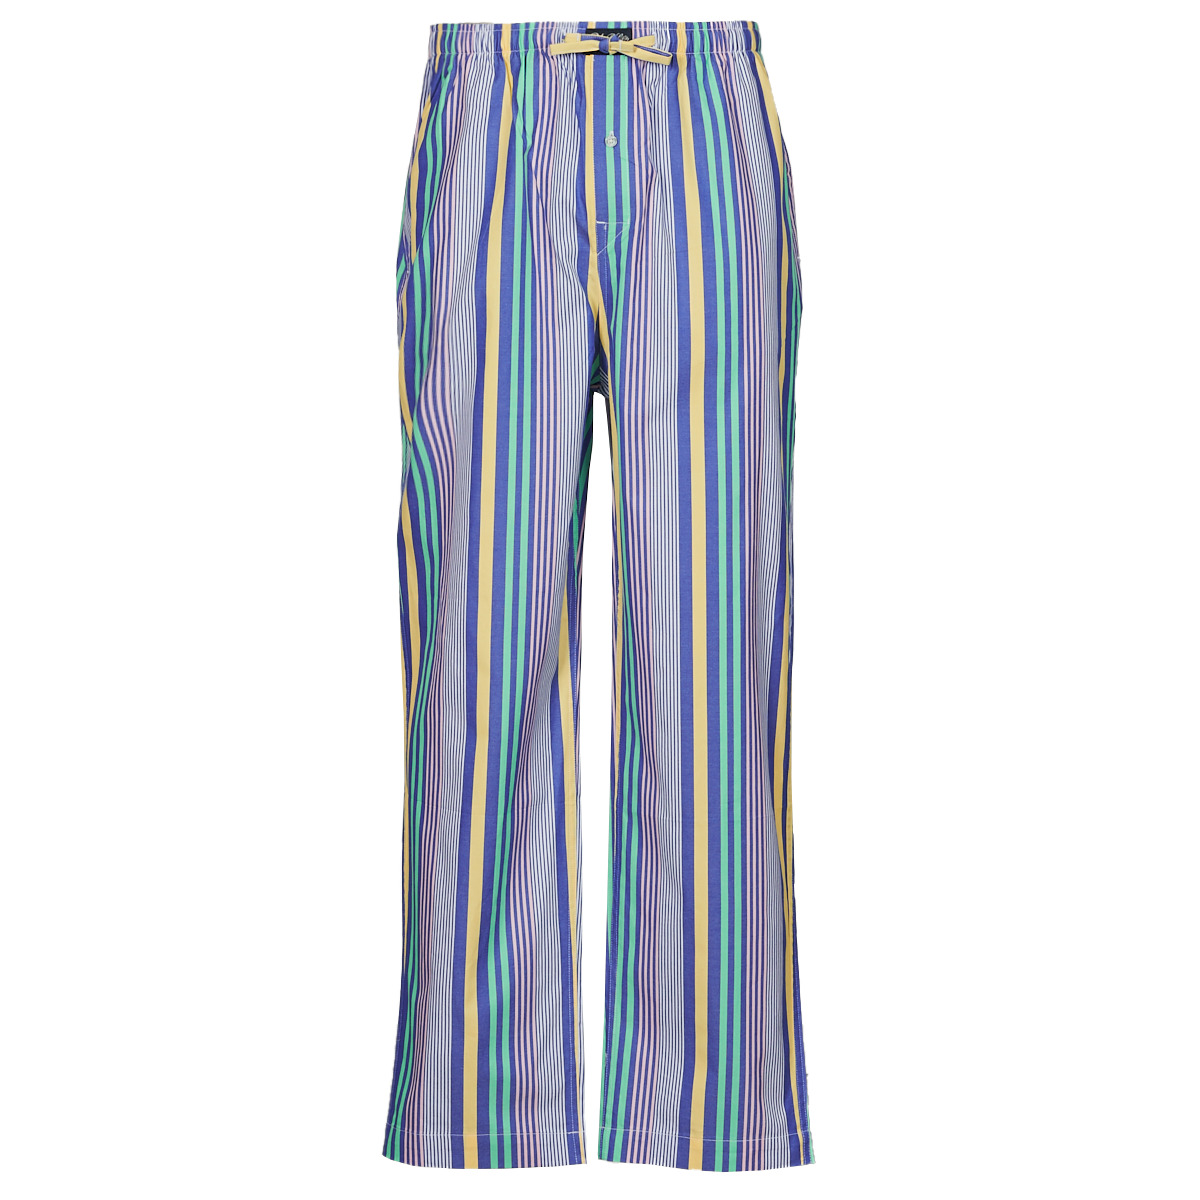 Vêtements Женские рубашки в полоску Marc O Polo think Polo think Ralph Lauren PJ PANT-SLEEP-BOTTOM Multicolore